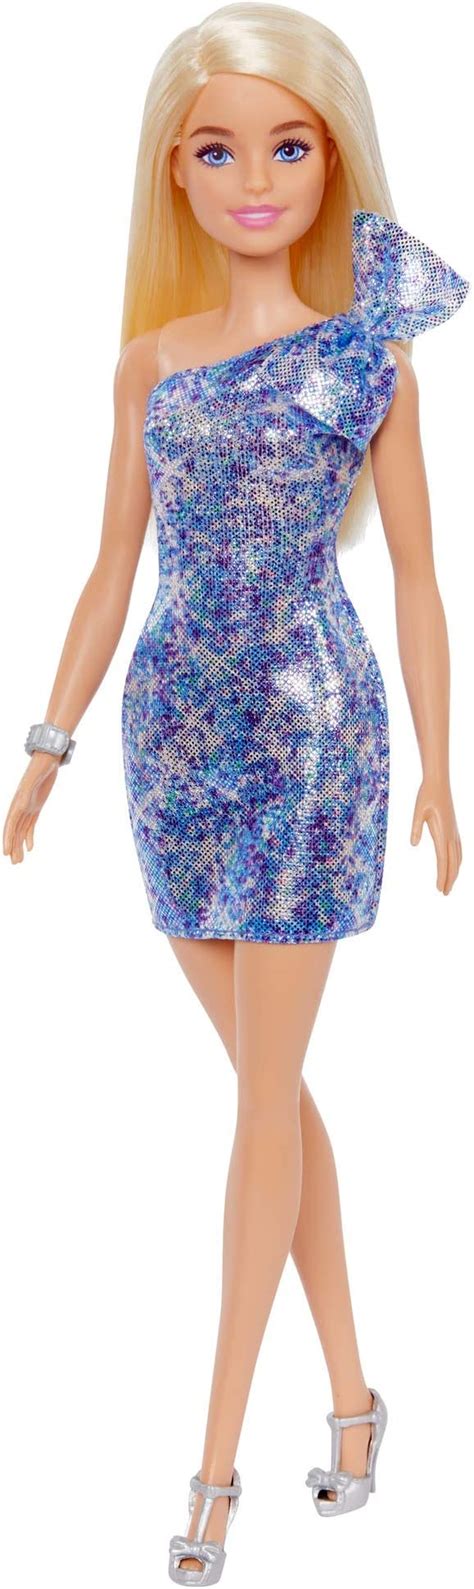 Barbie Mattel Glitz Outfits Blonde Doll With Blue Dress Grb32